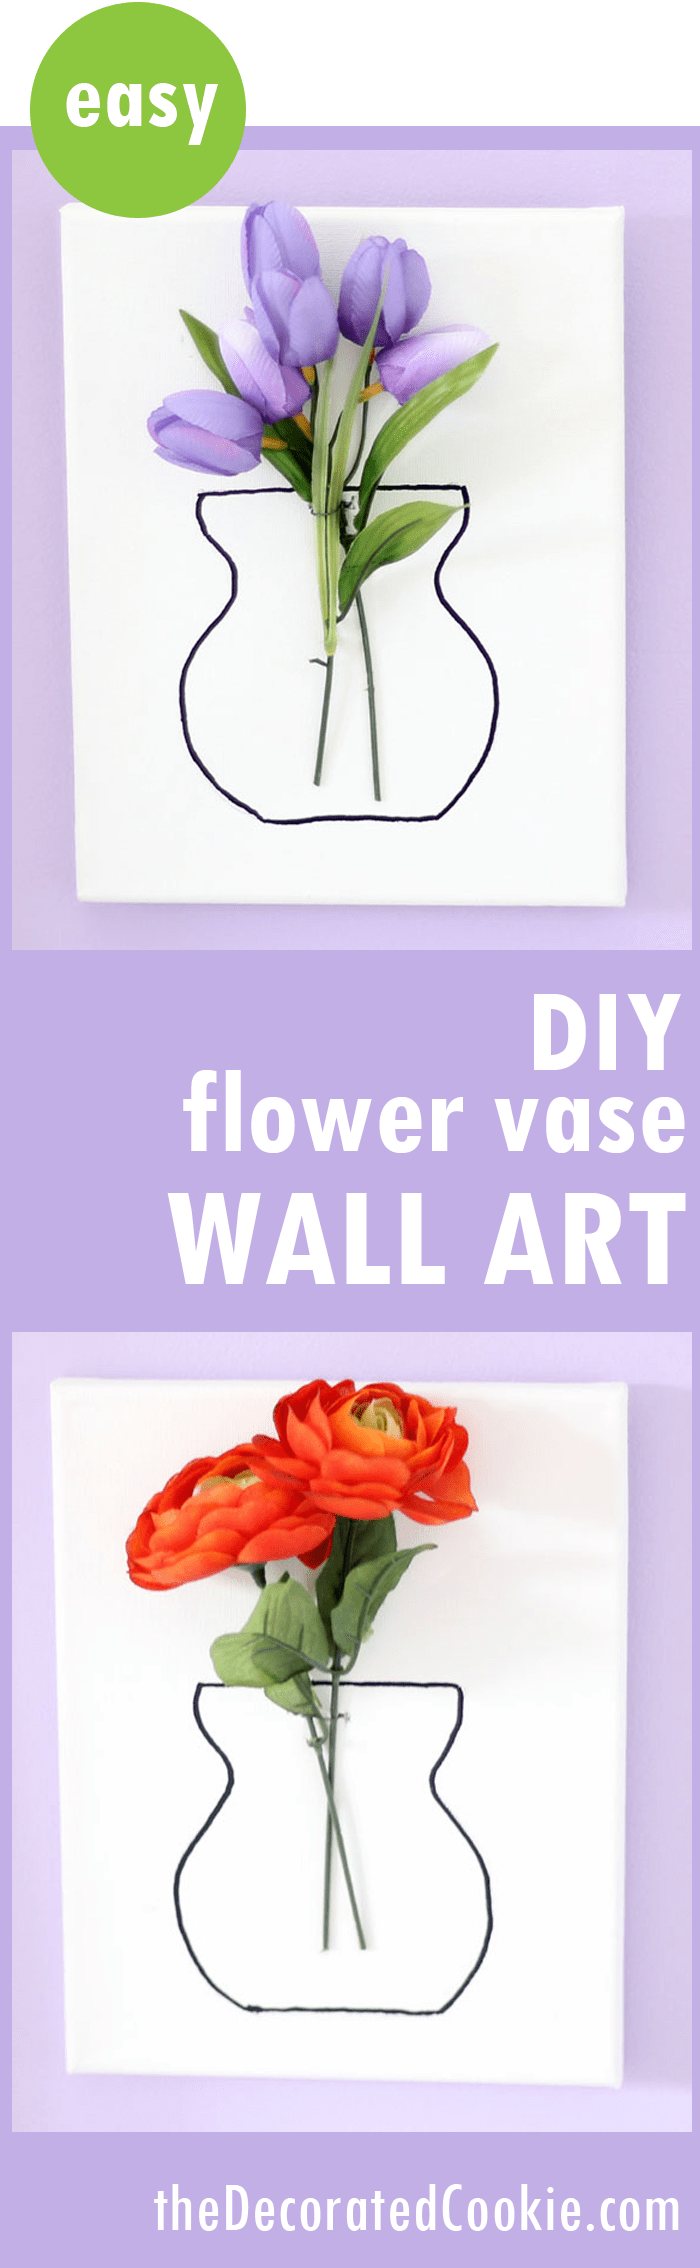 DIY flower vase wall art 